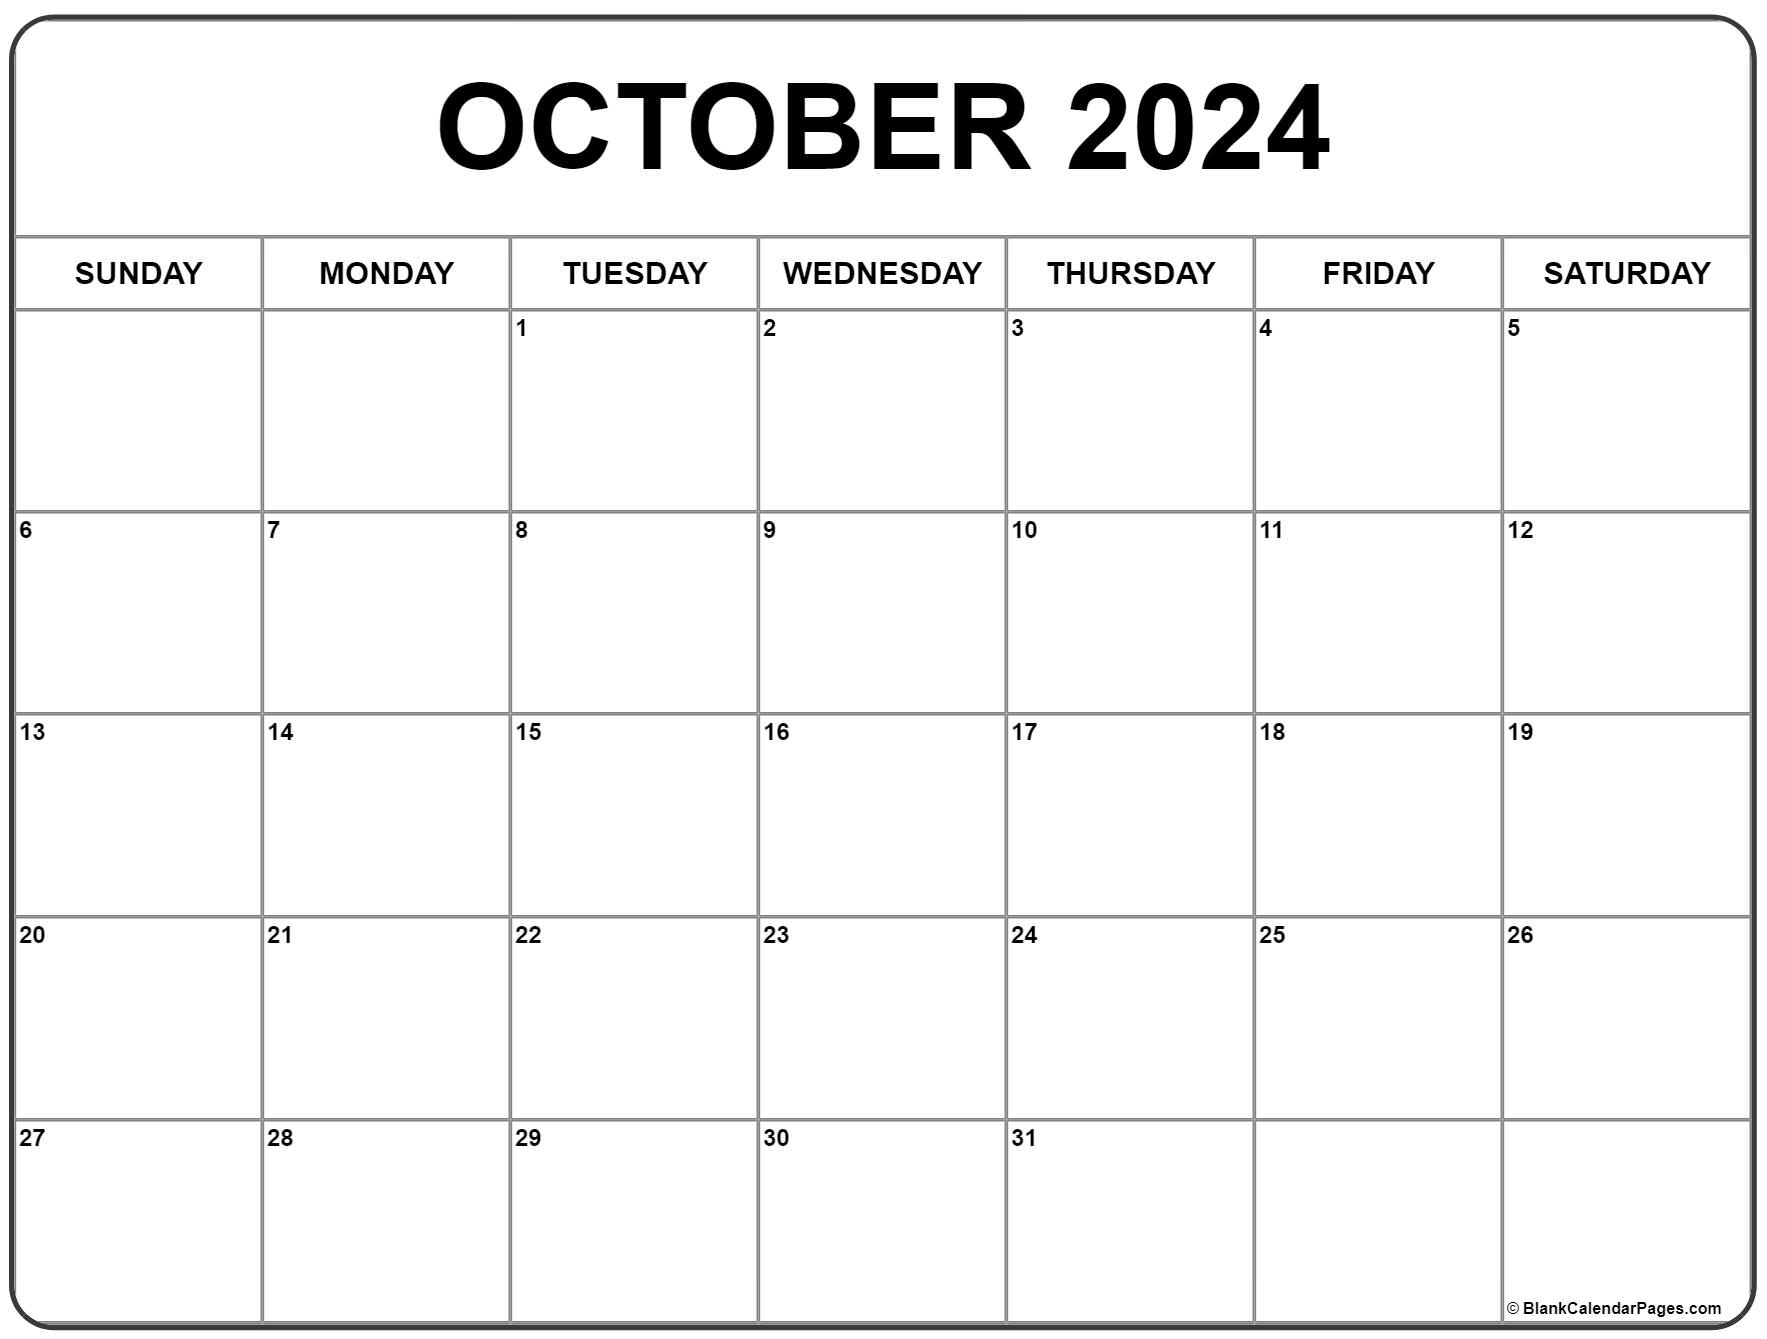 October 2024 Calendar | Free Printable Calendar for October 2024 Calendar Printable